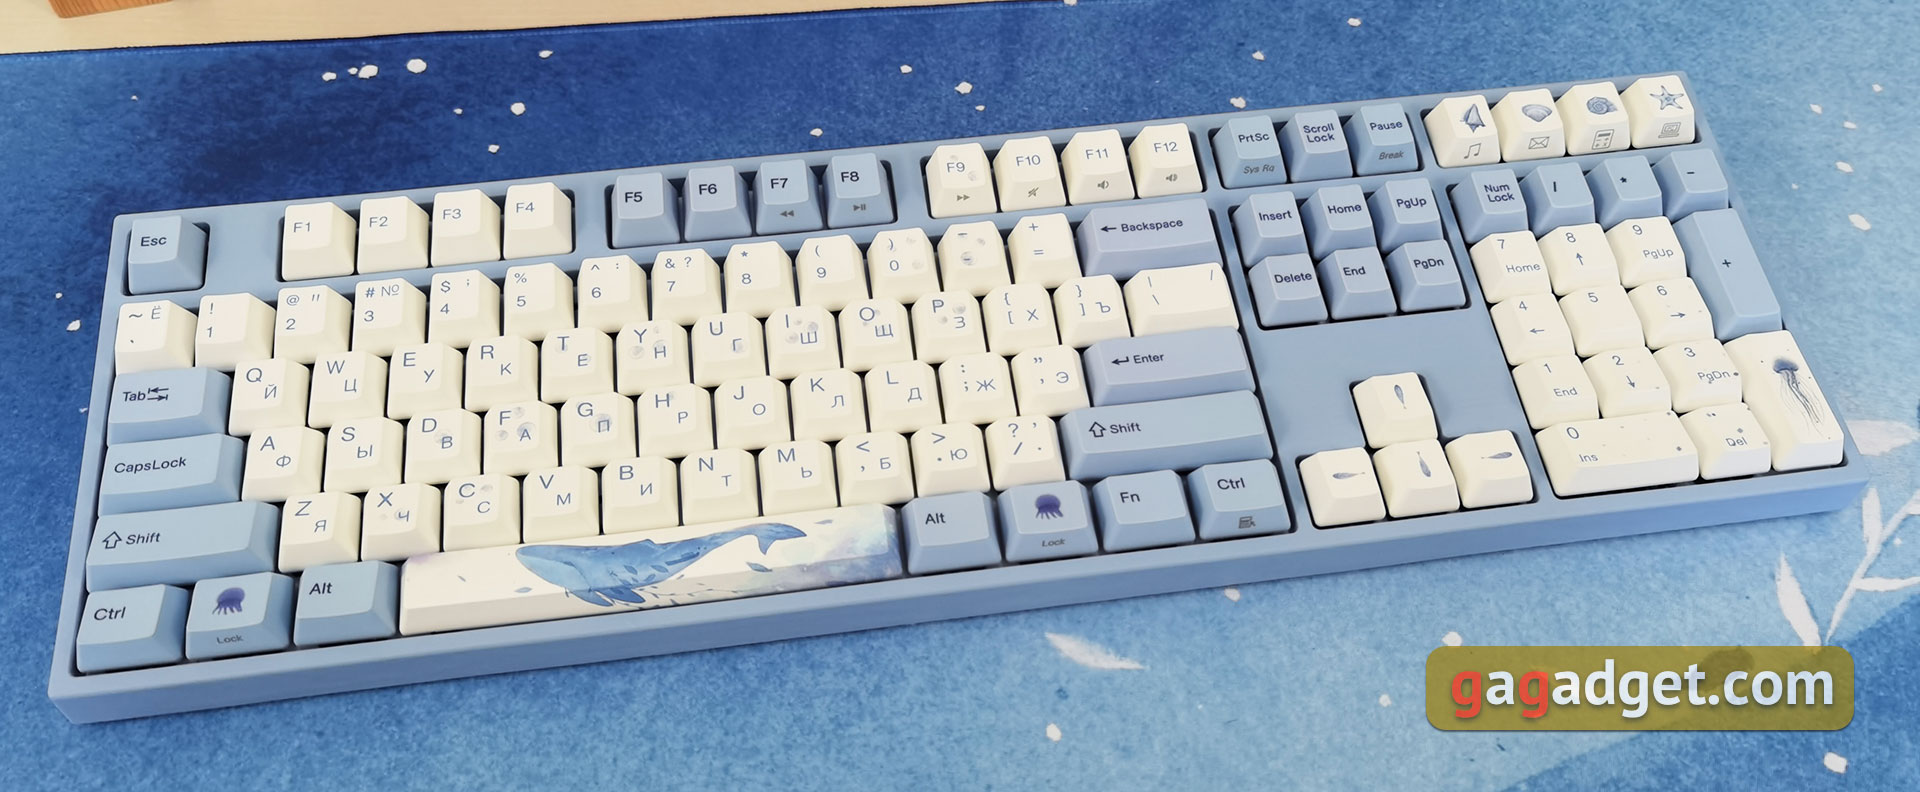 Varmilo VA108M Sea Melody review: a Hi-End mechanical keyboard-22